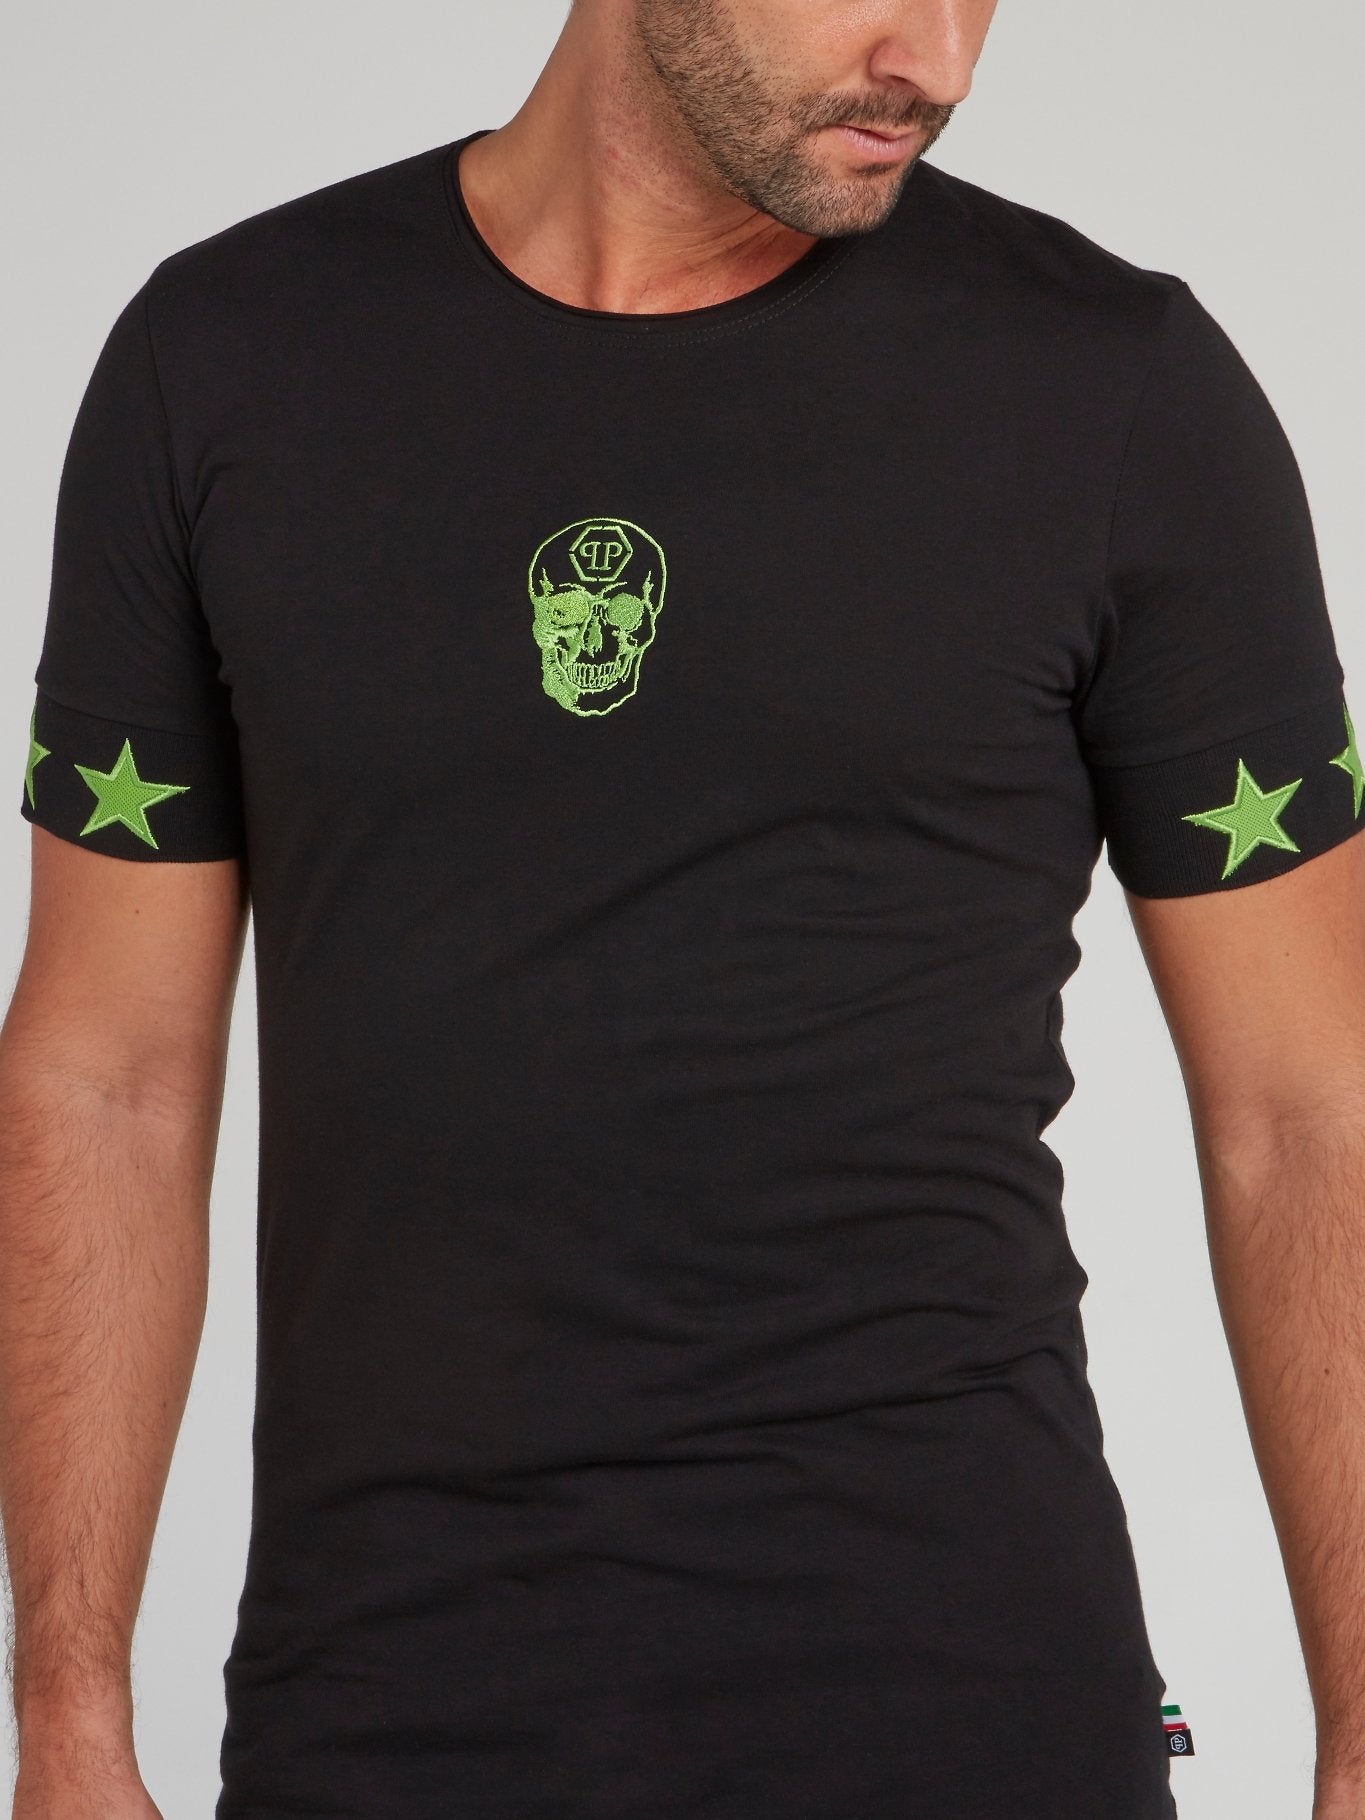 Black with Green Stars Skull T-Shirt